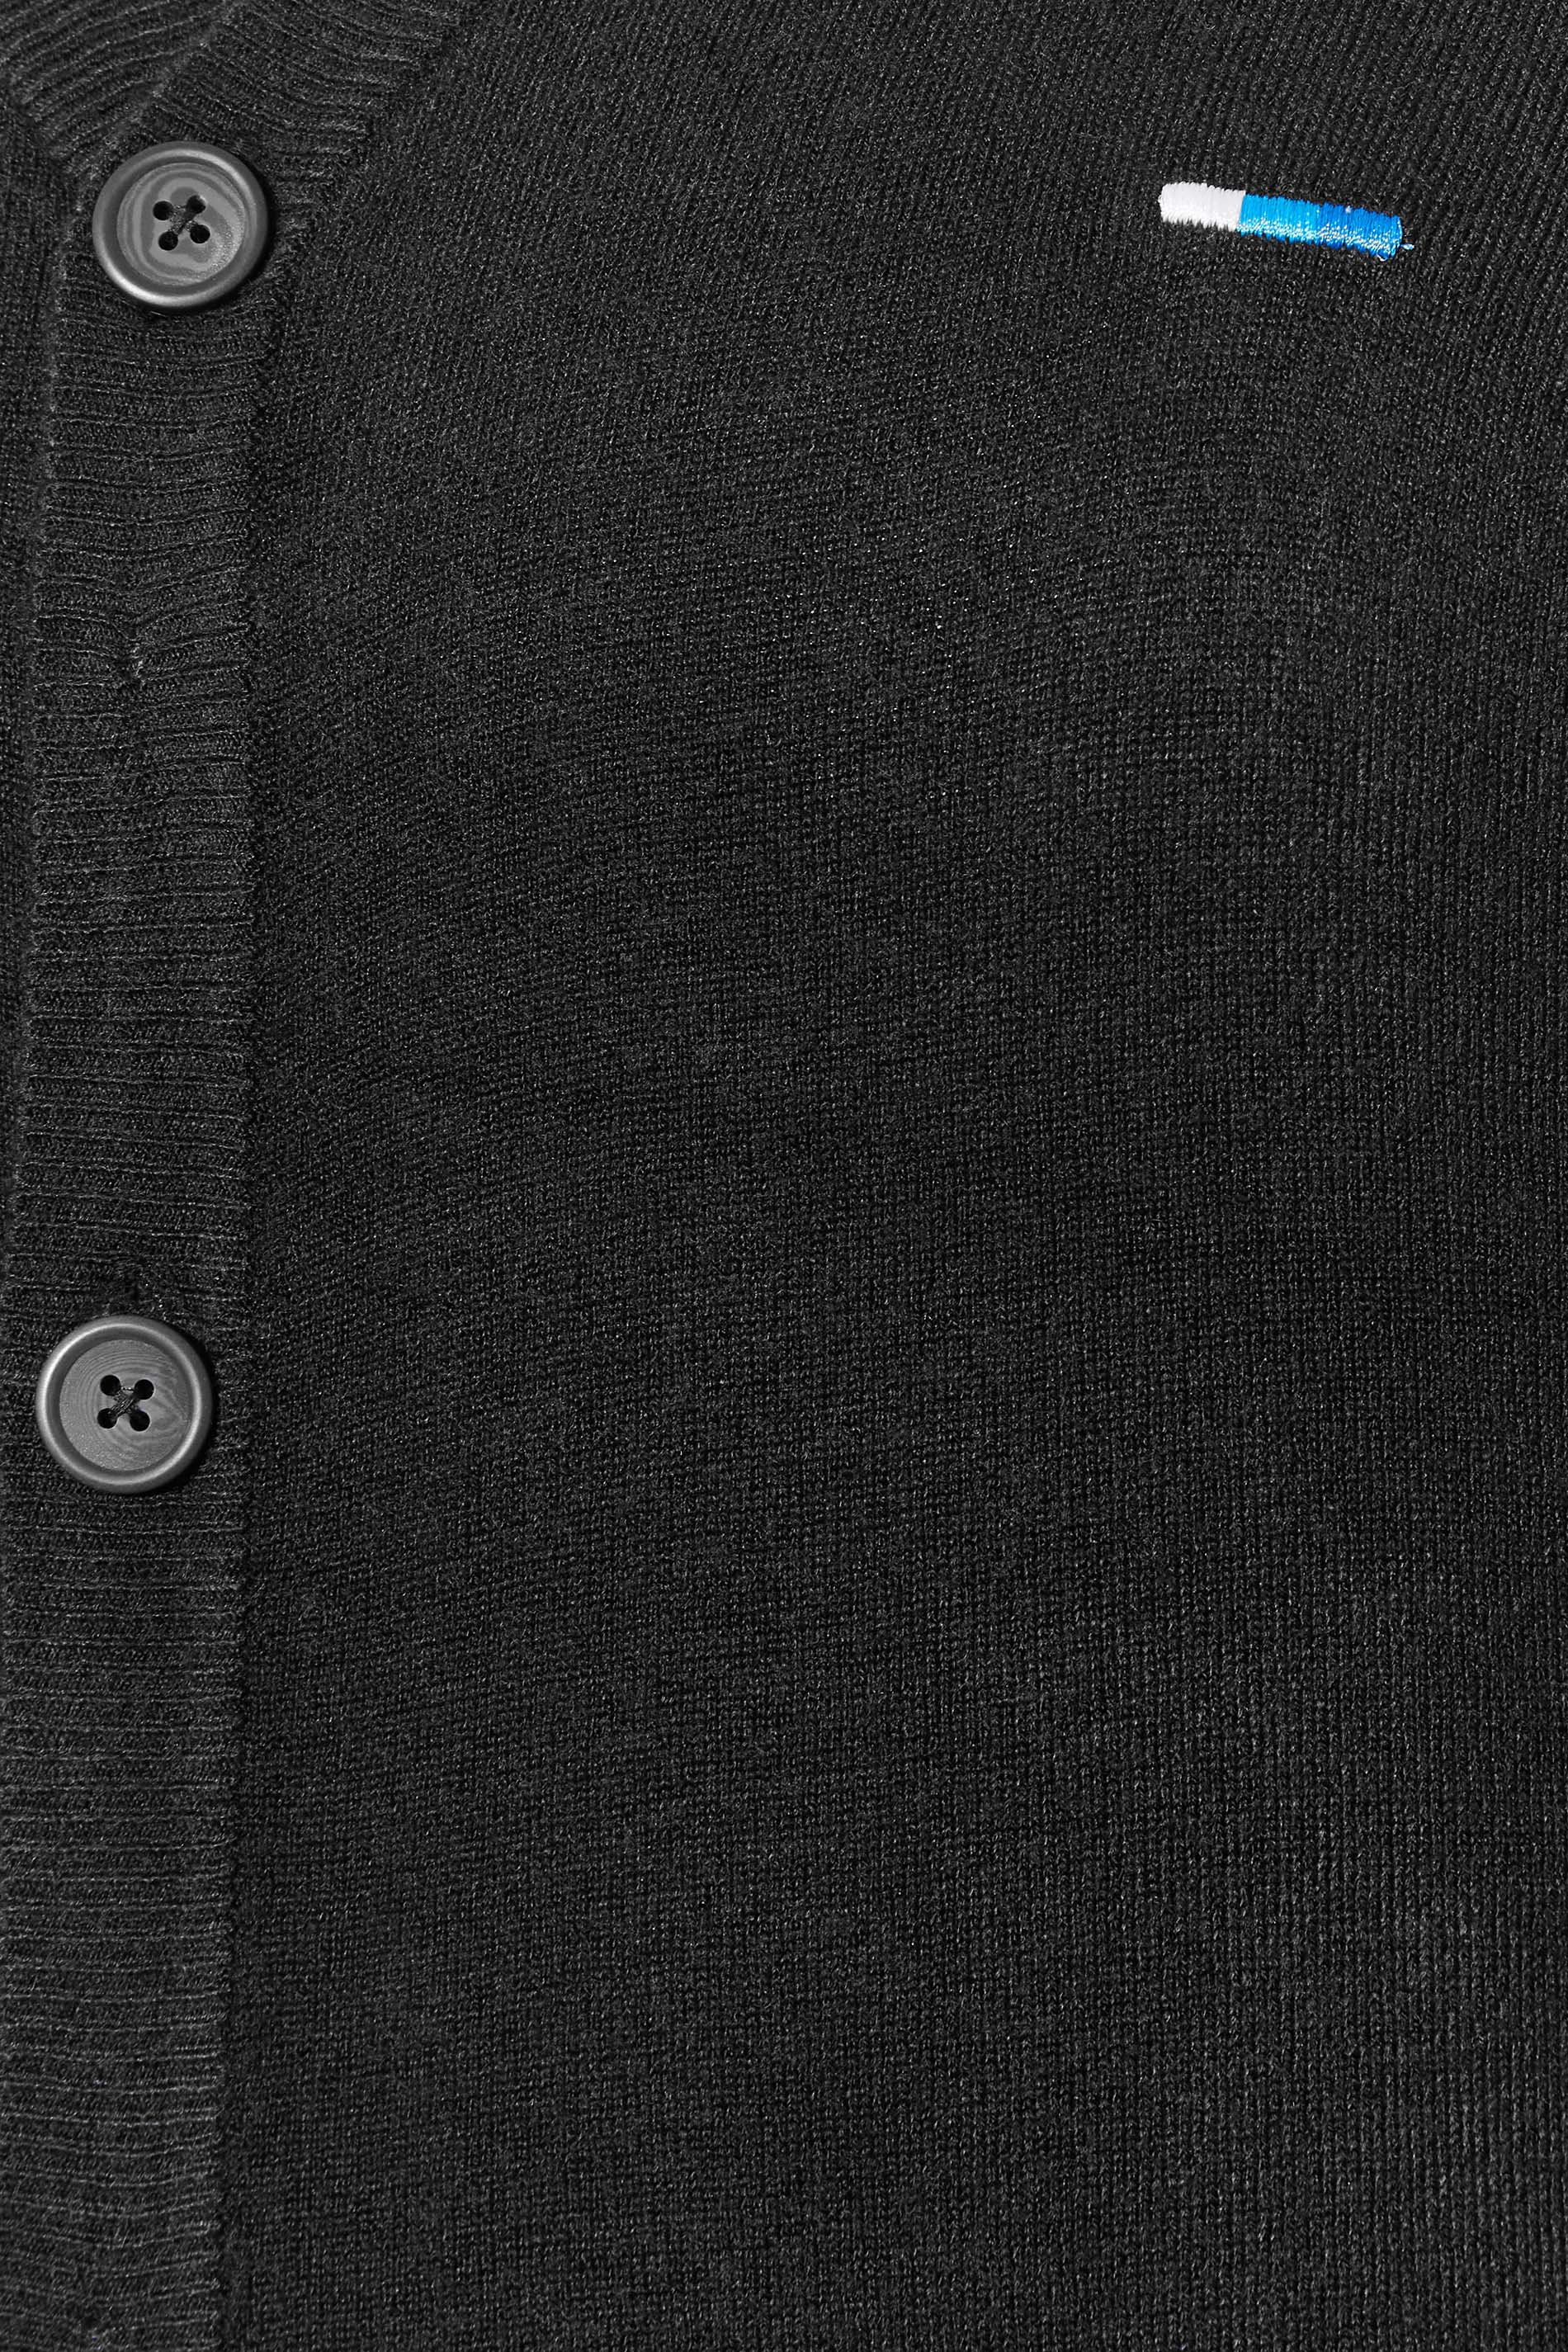 BadRhino Black Essential Knitted Cardigan | BadRhino 2